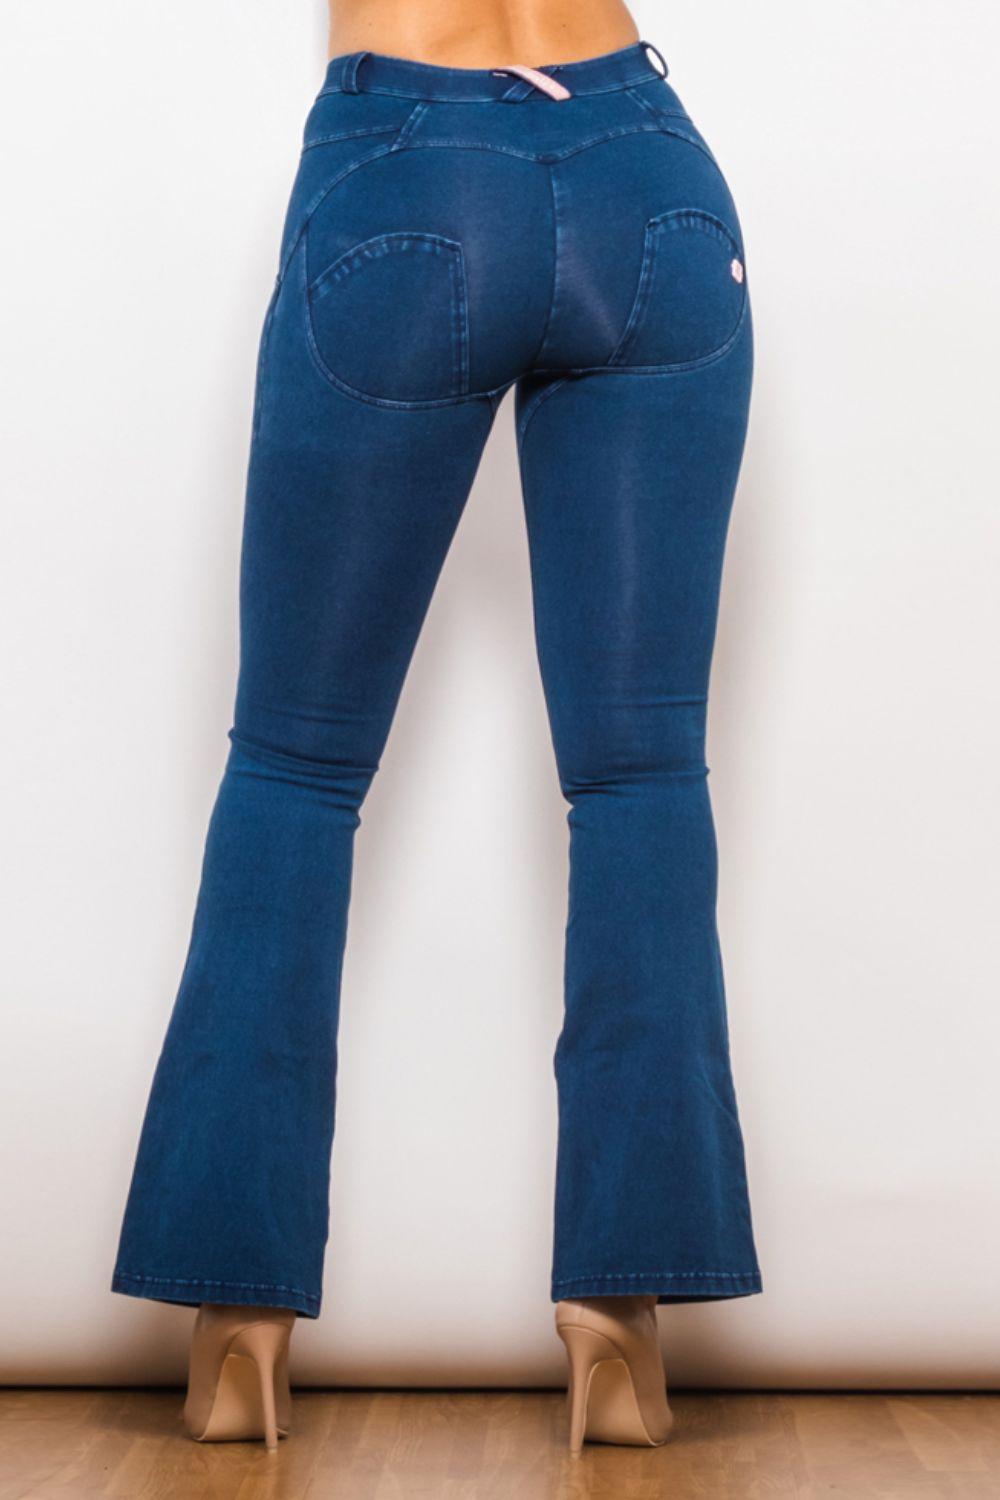 Buttoned Flare Long Jeans - BELLATRENDZ